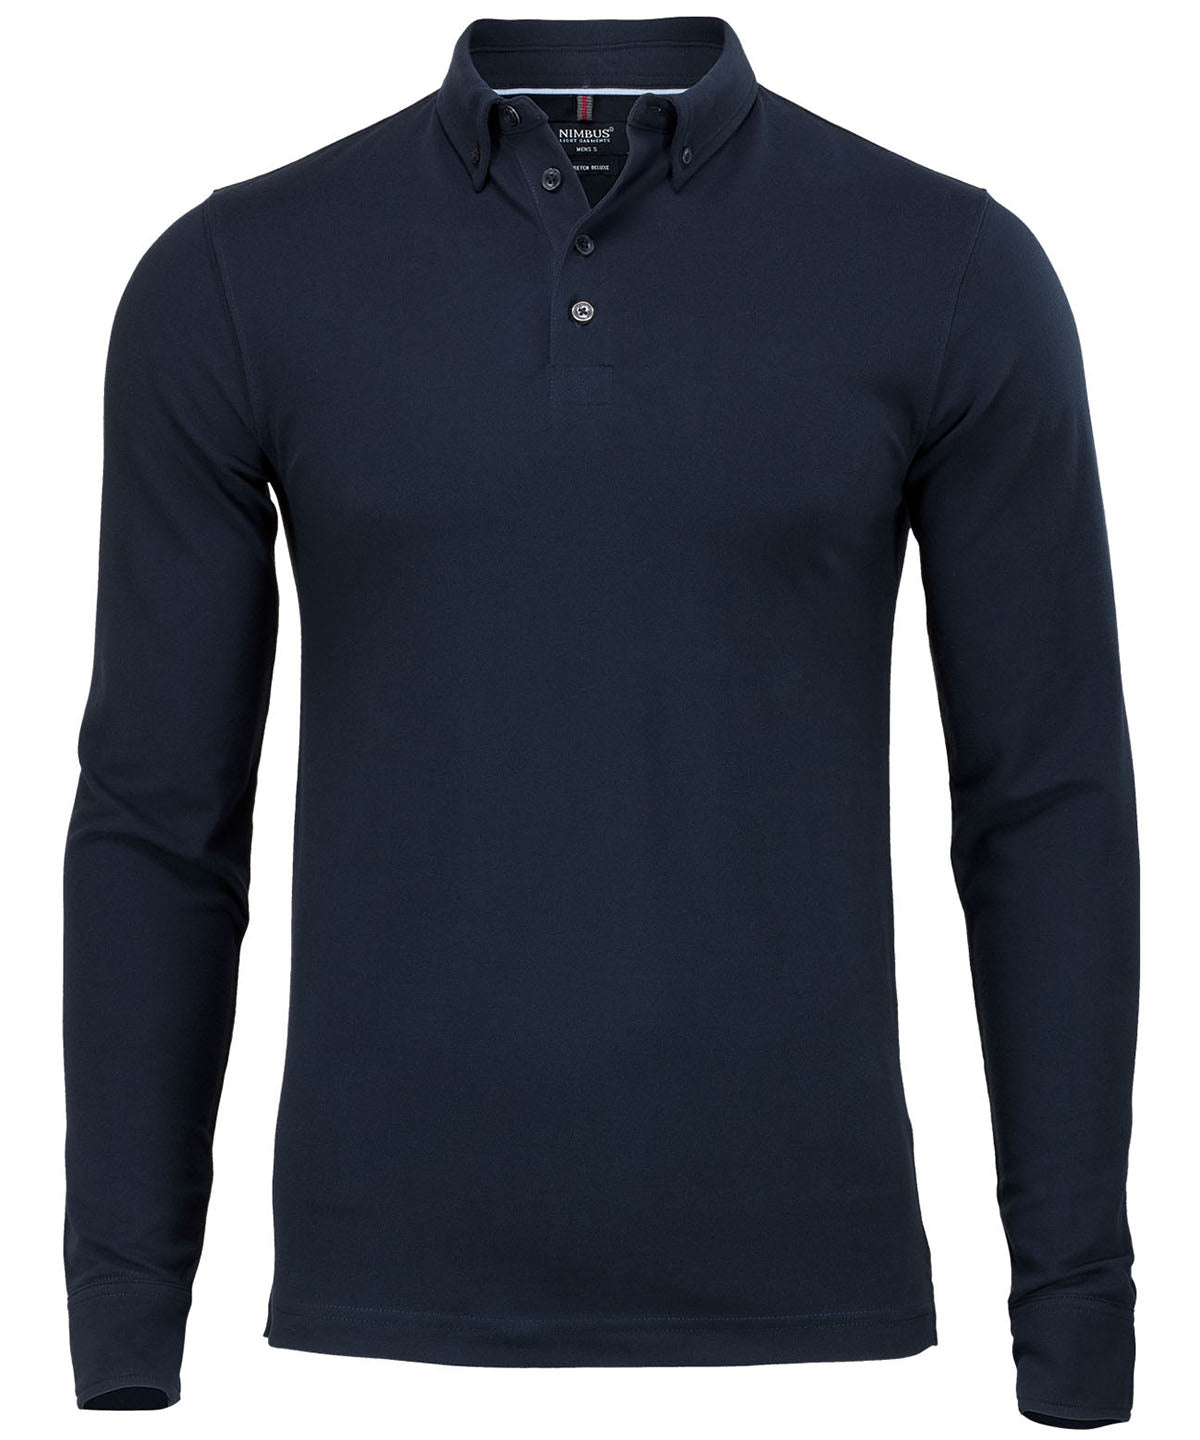 Personalised Polo Shirts - Black Nimbus Carlington – deluxe long sleeve polo